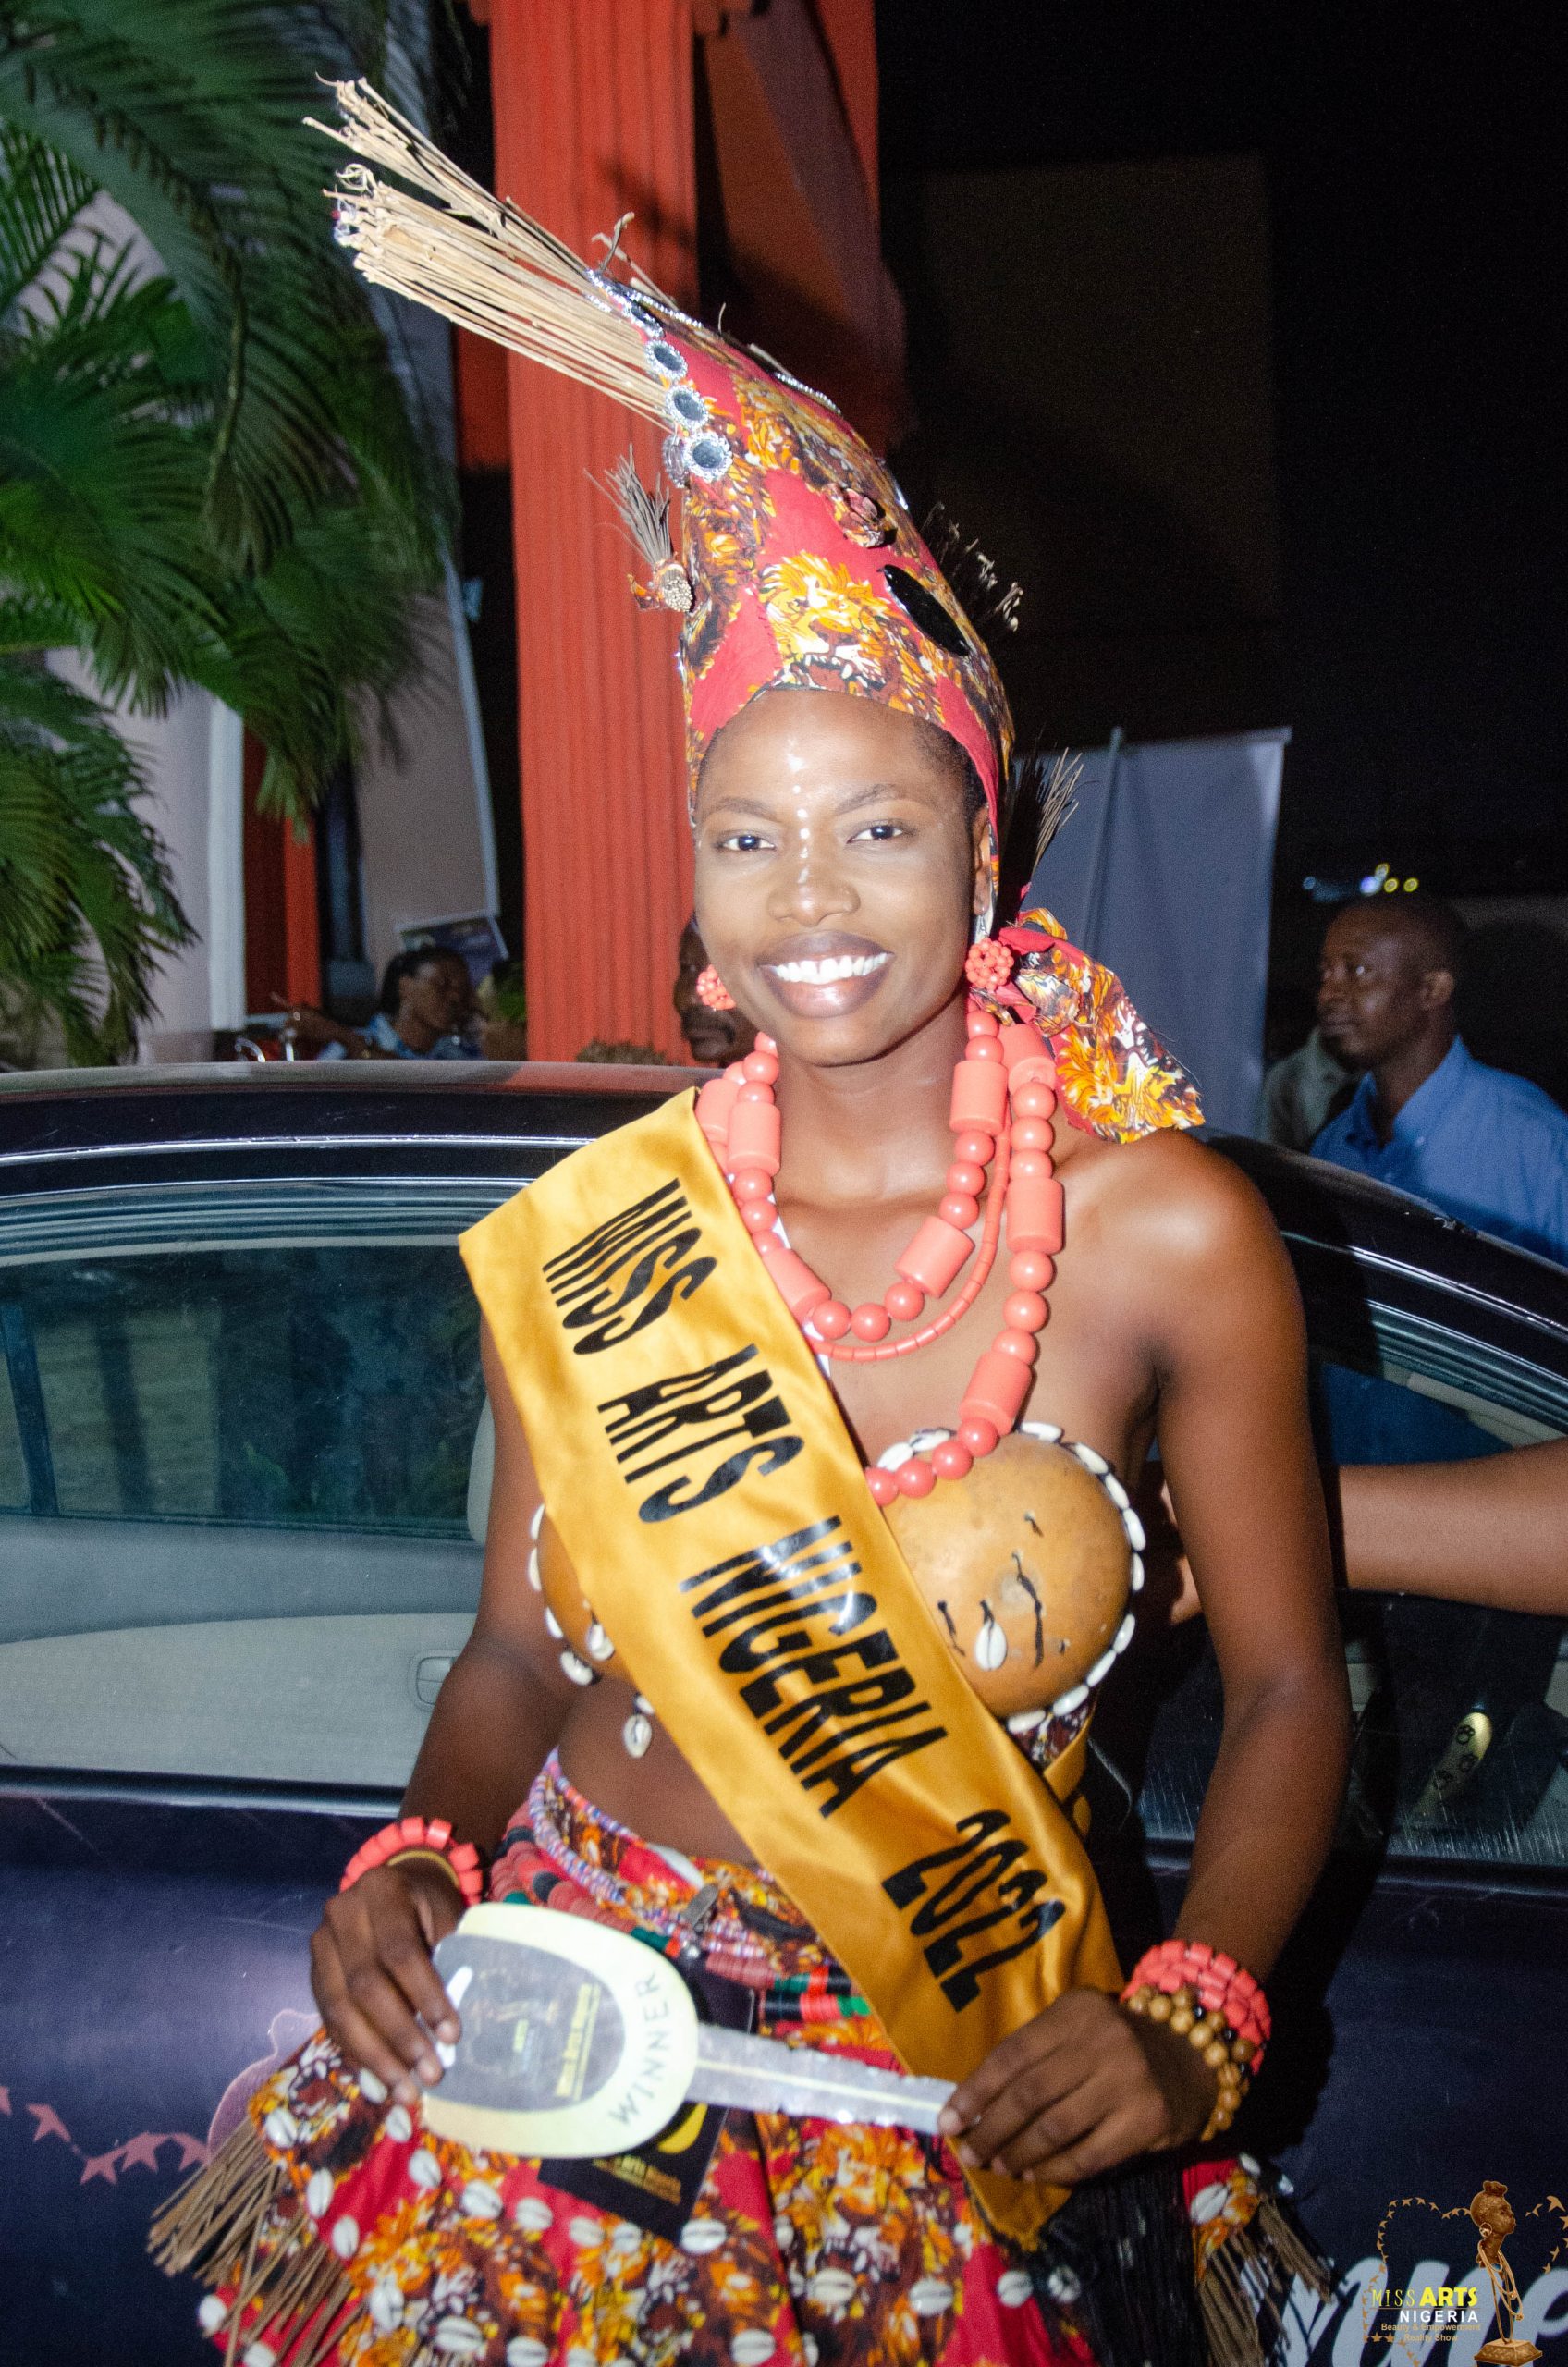 Anambra Born Model, Biana, Wins 1st Miss Arts Nigeria Beauty & Empowerment Reality Show